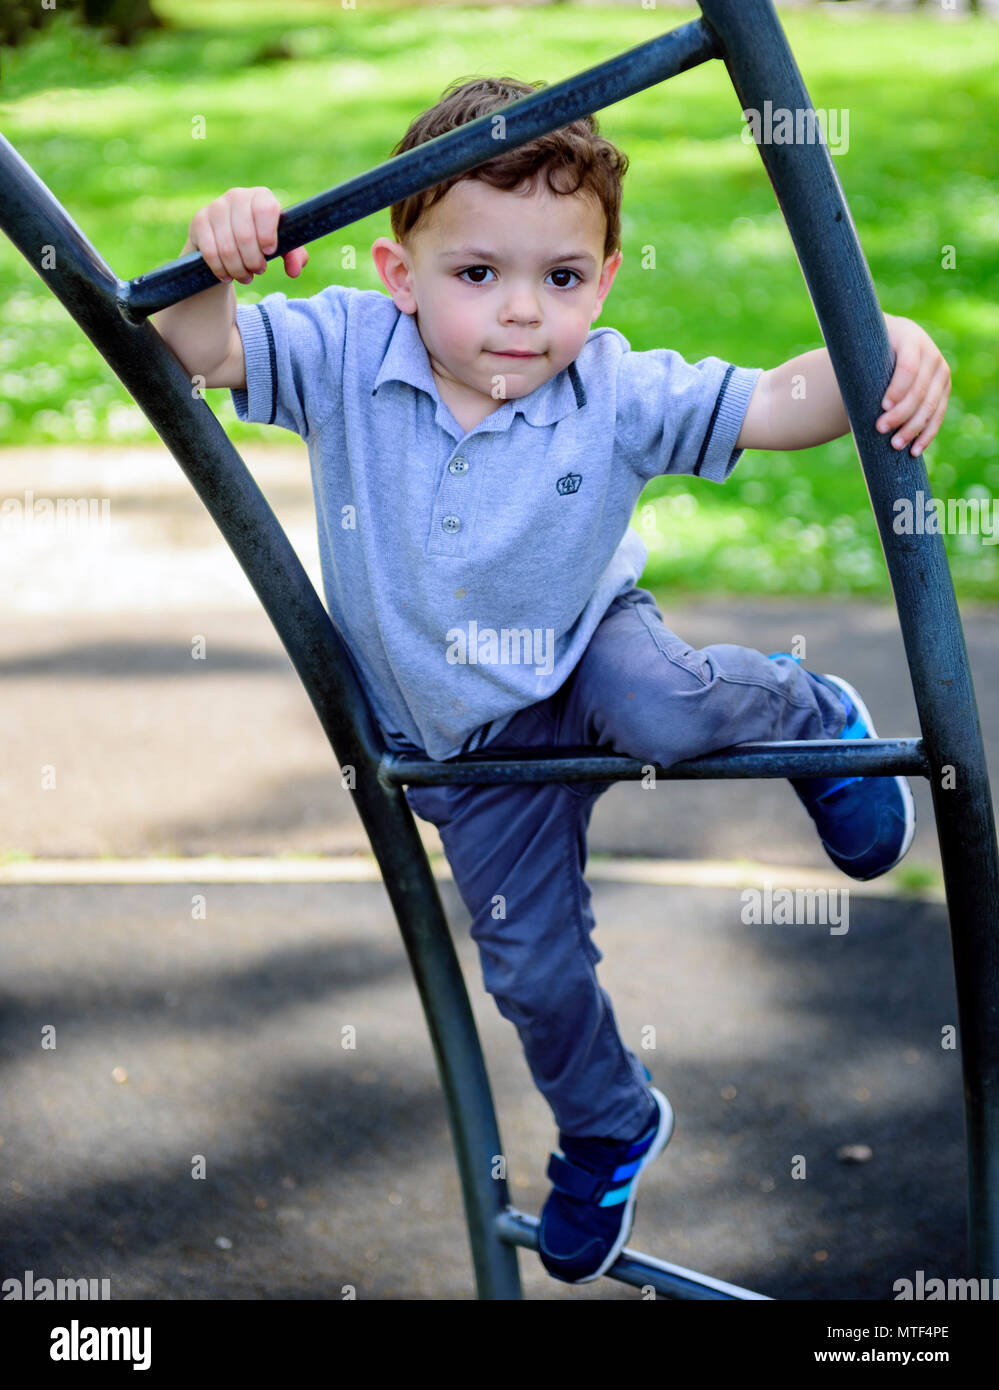 Youg boy on a park climbing frame Stock Photo